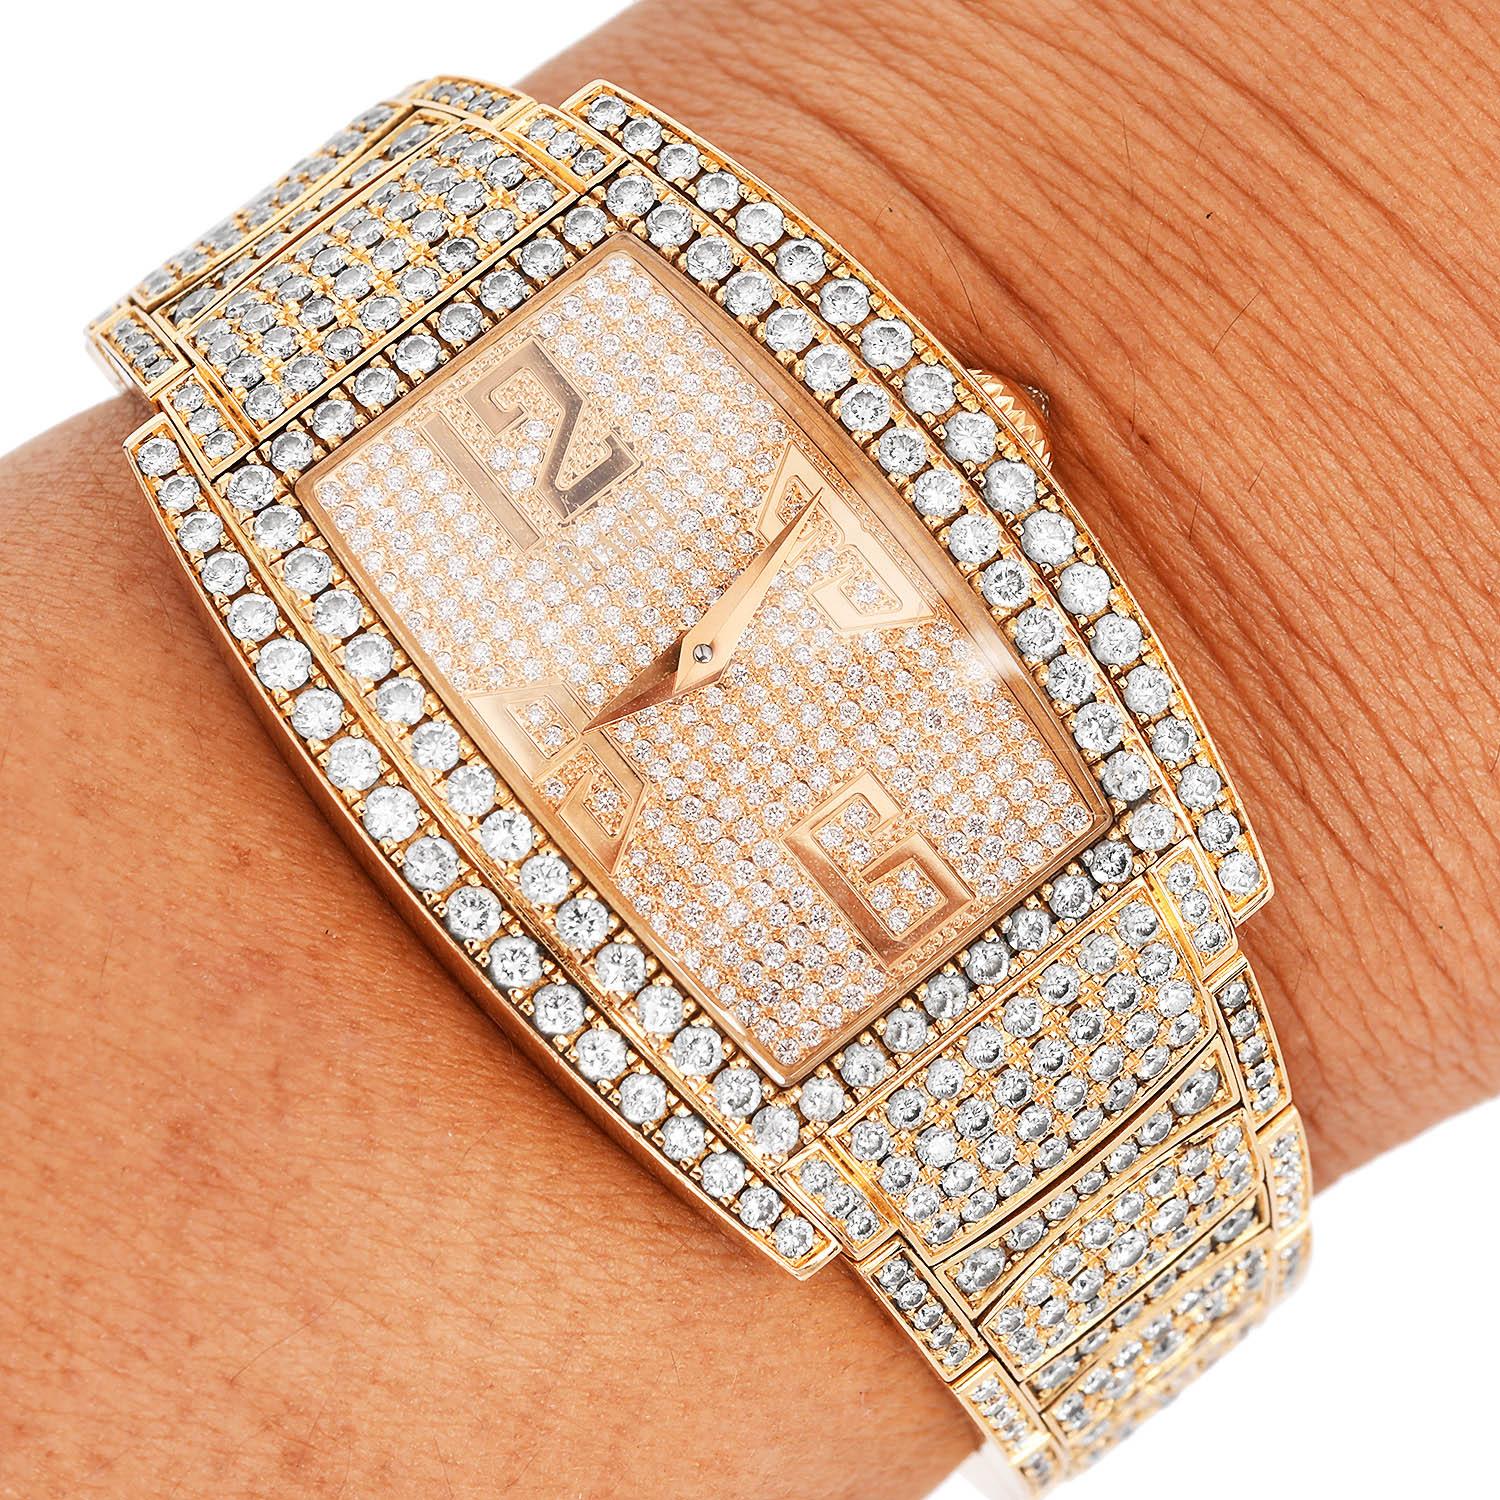 Piaget Limelight Tonneau Diamond Bracelet Gold Watch  1